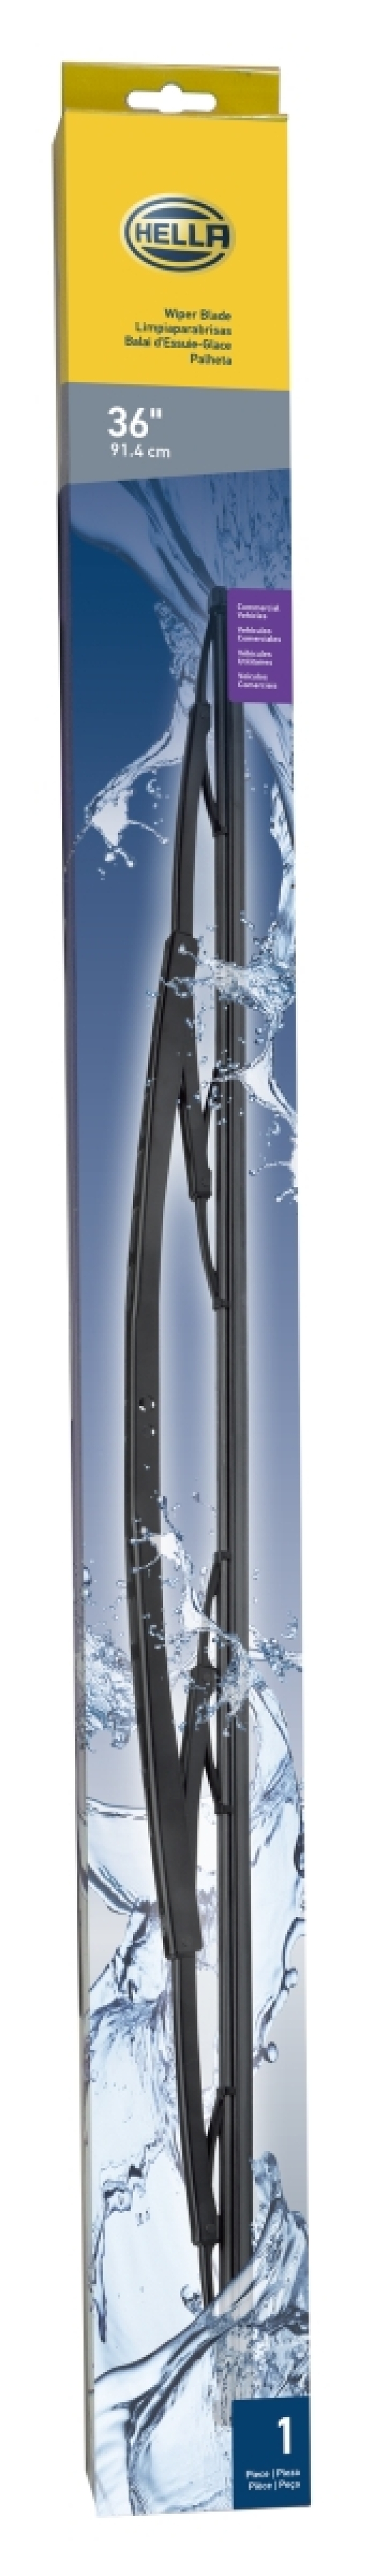 Hella Commercial Wiper Blade 36in - Single - 9XW191398361